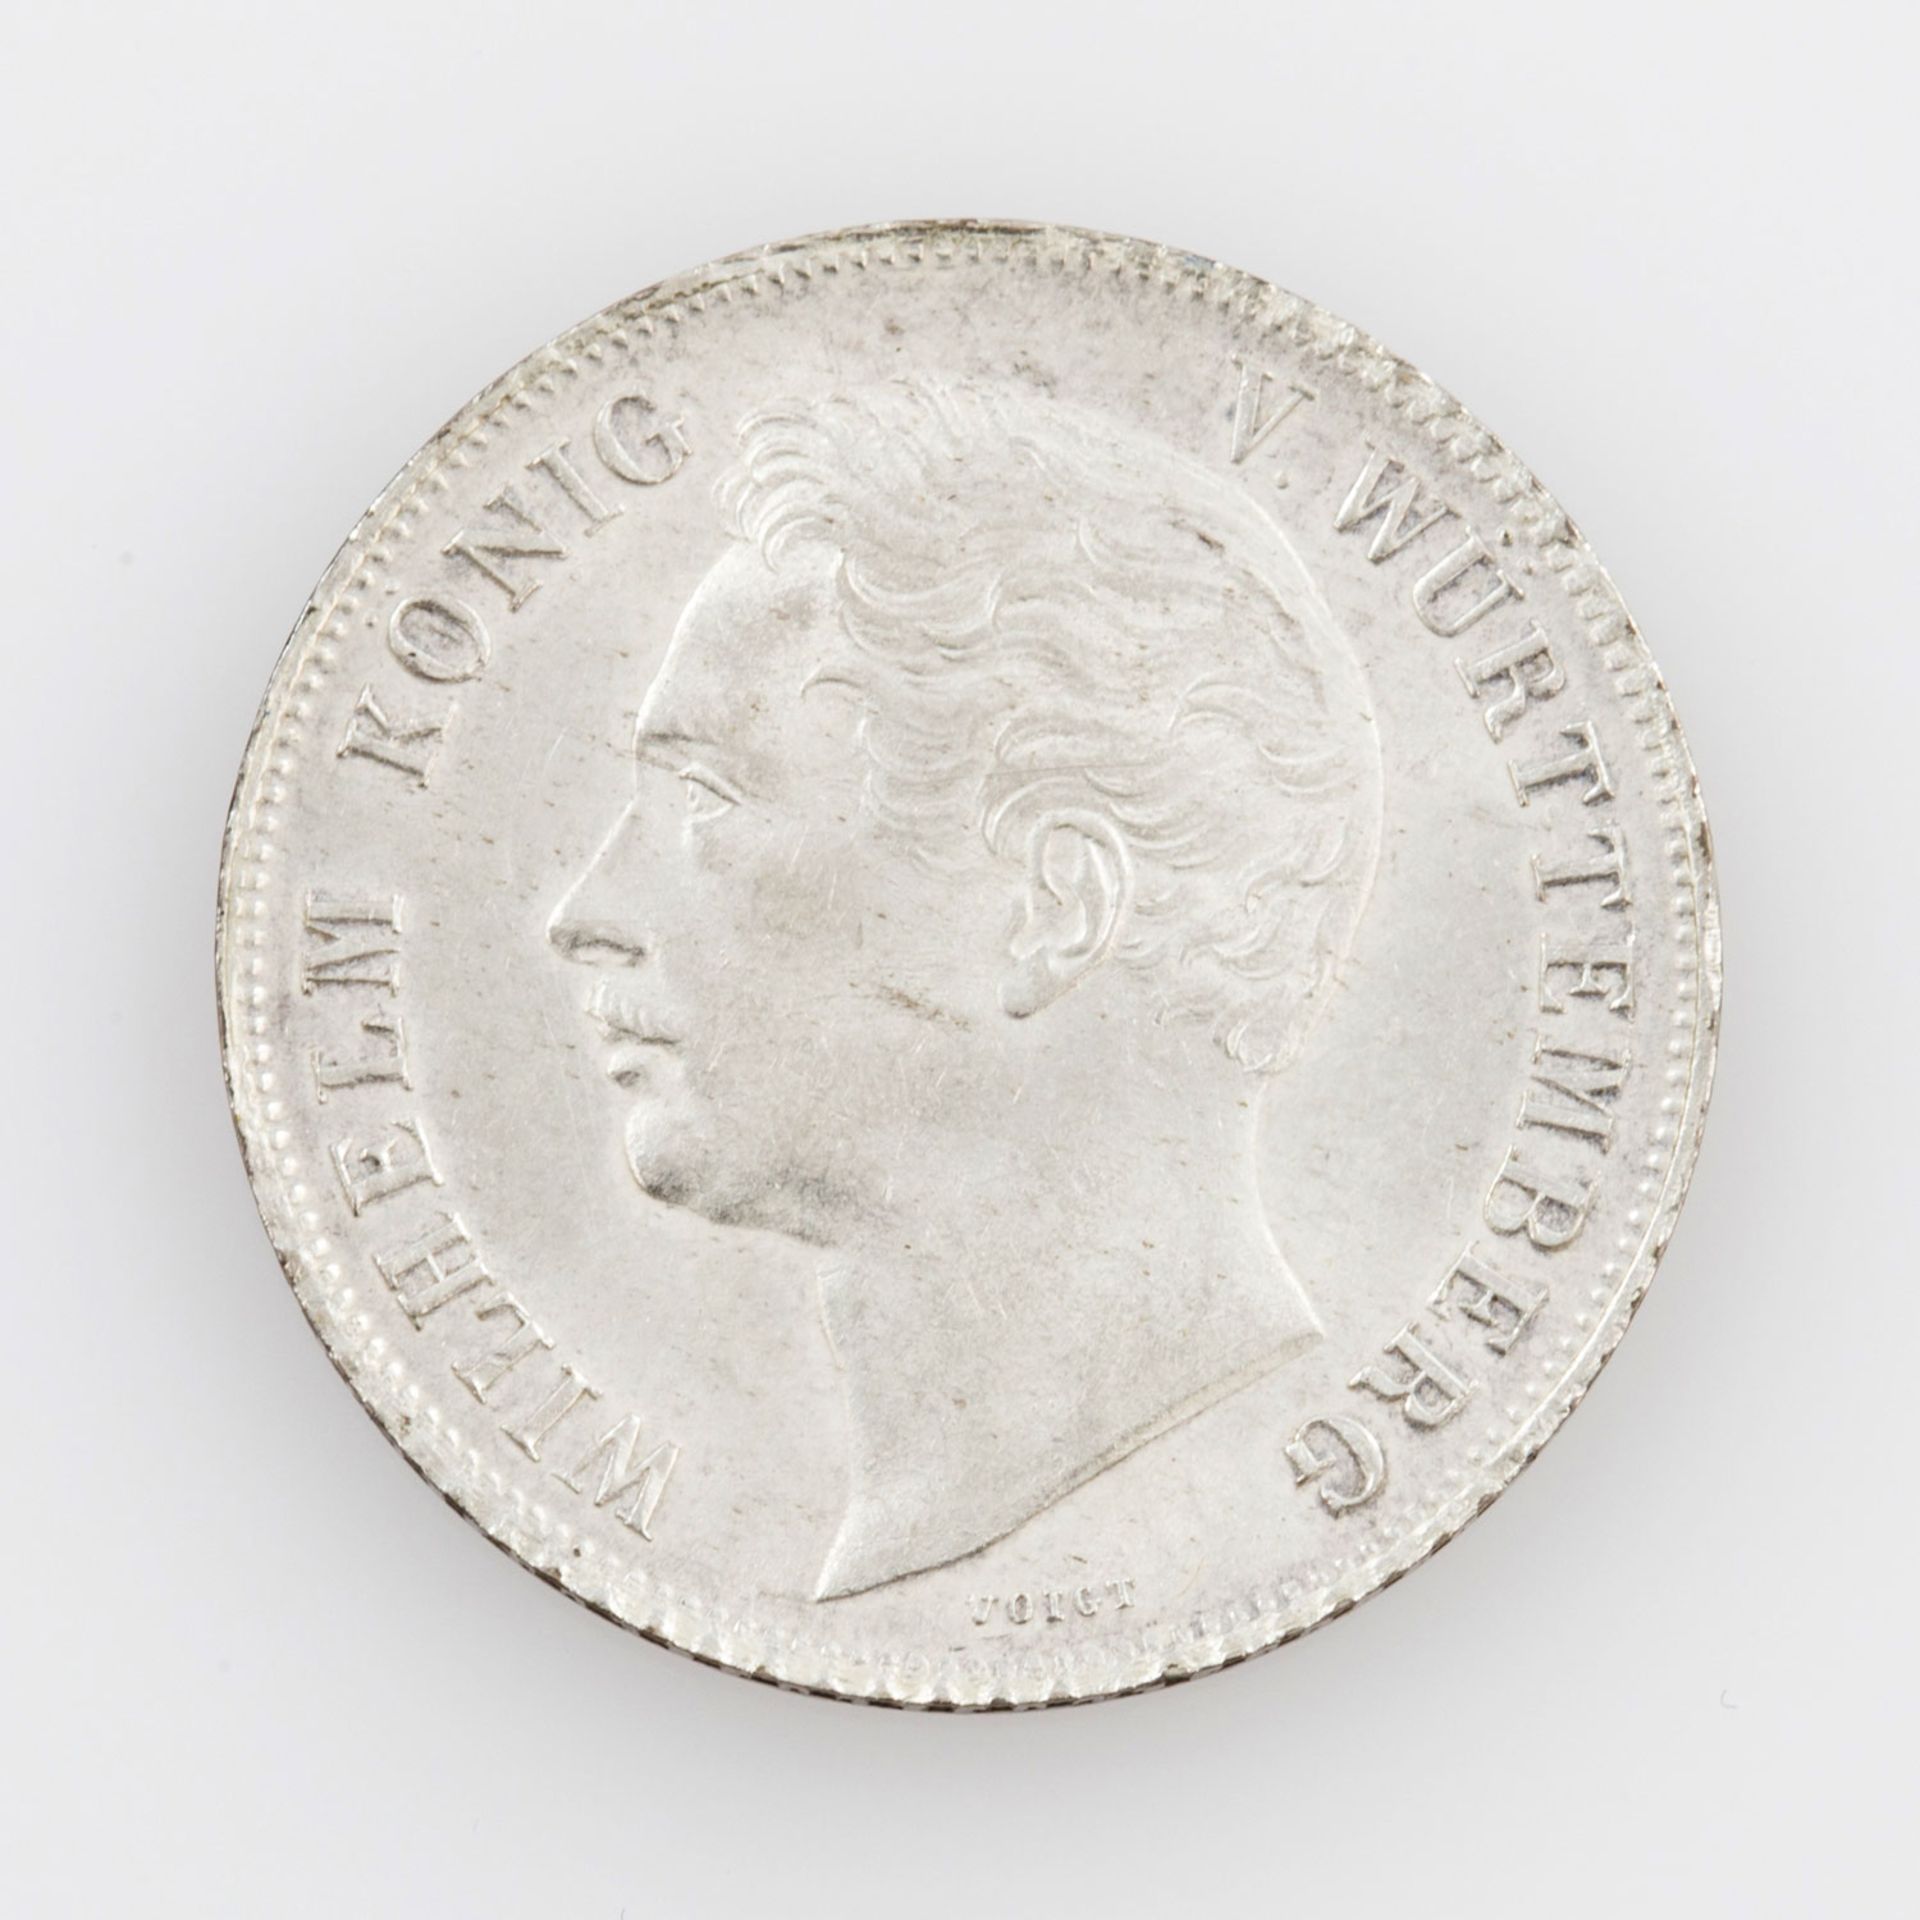 Württemberg - 1 Gulden 1850, Wilhelm I., AKS 85, vz/f. stgl.